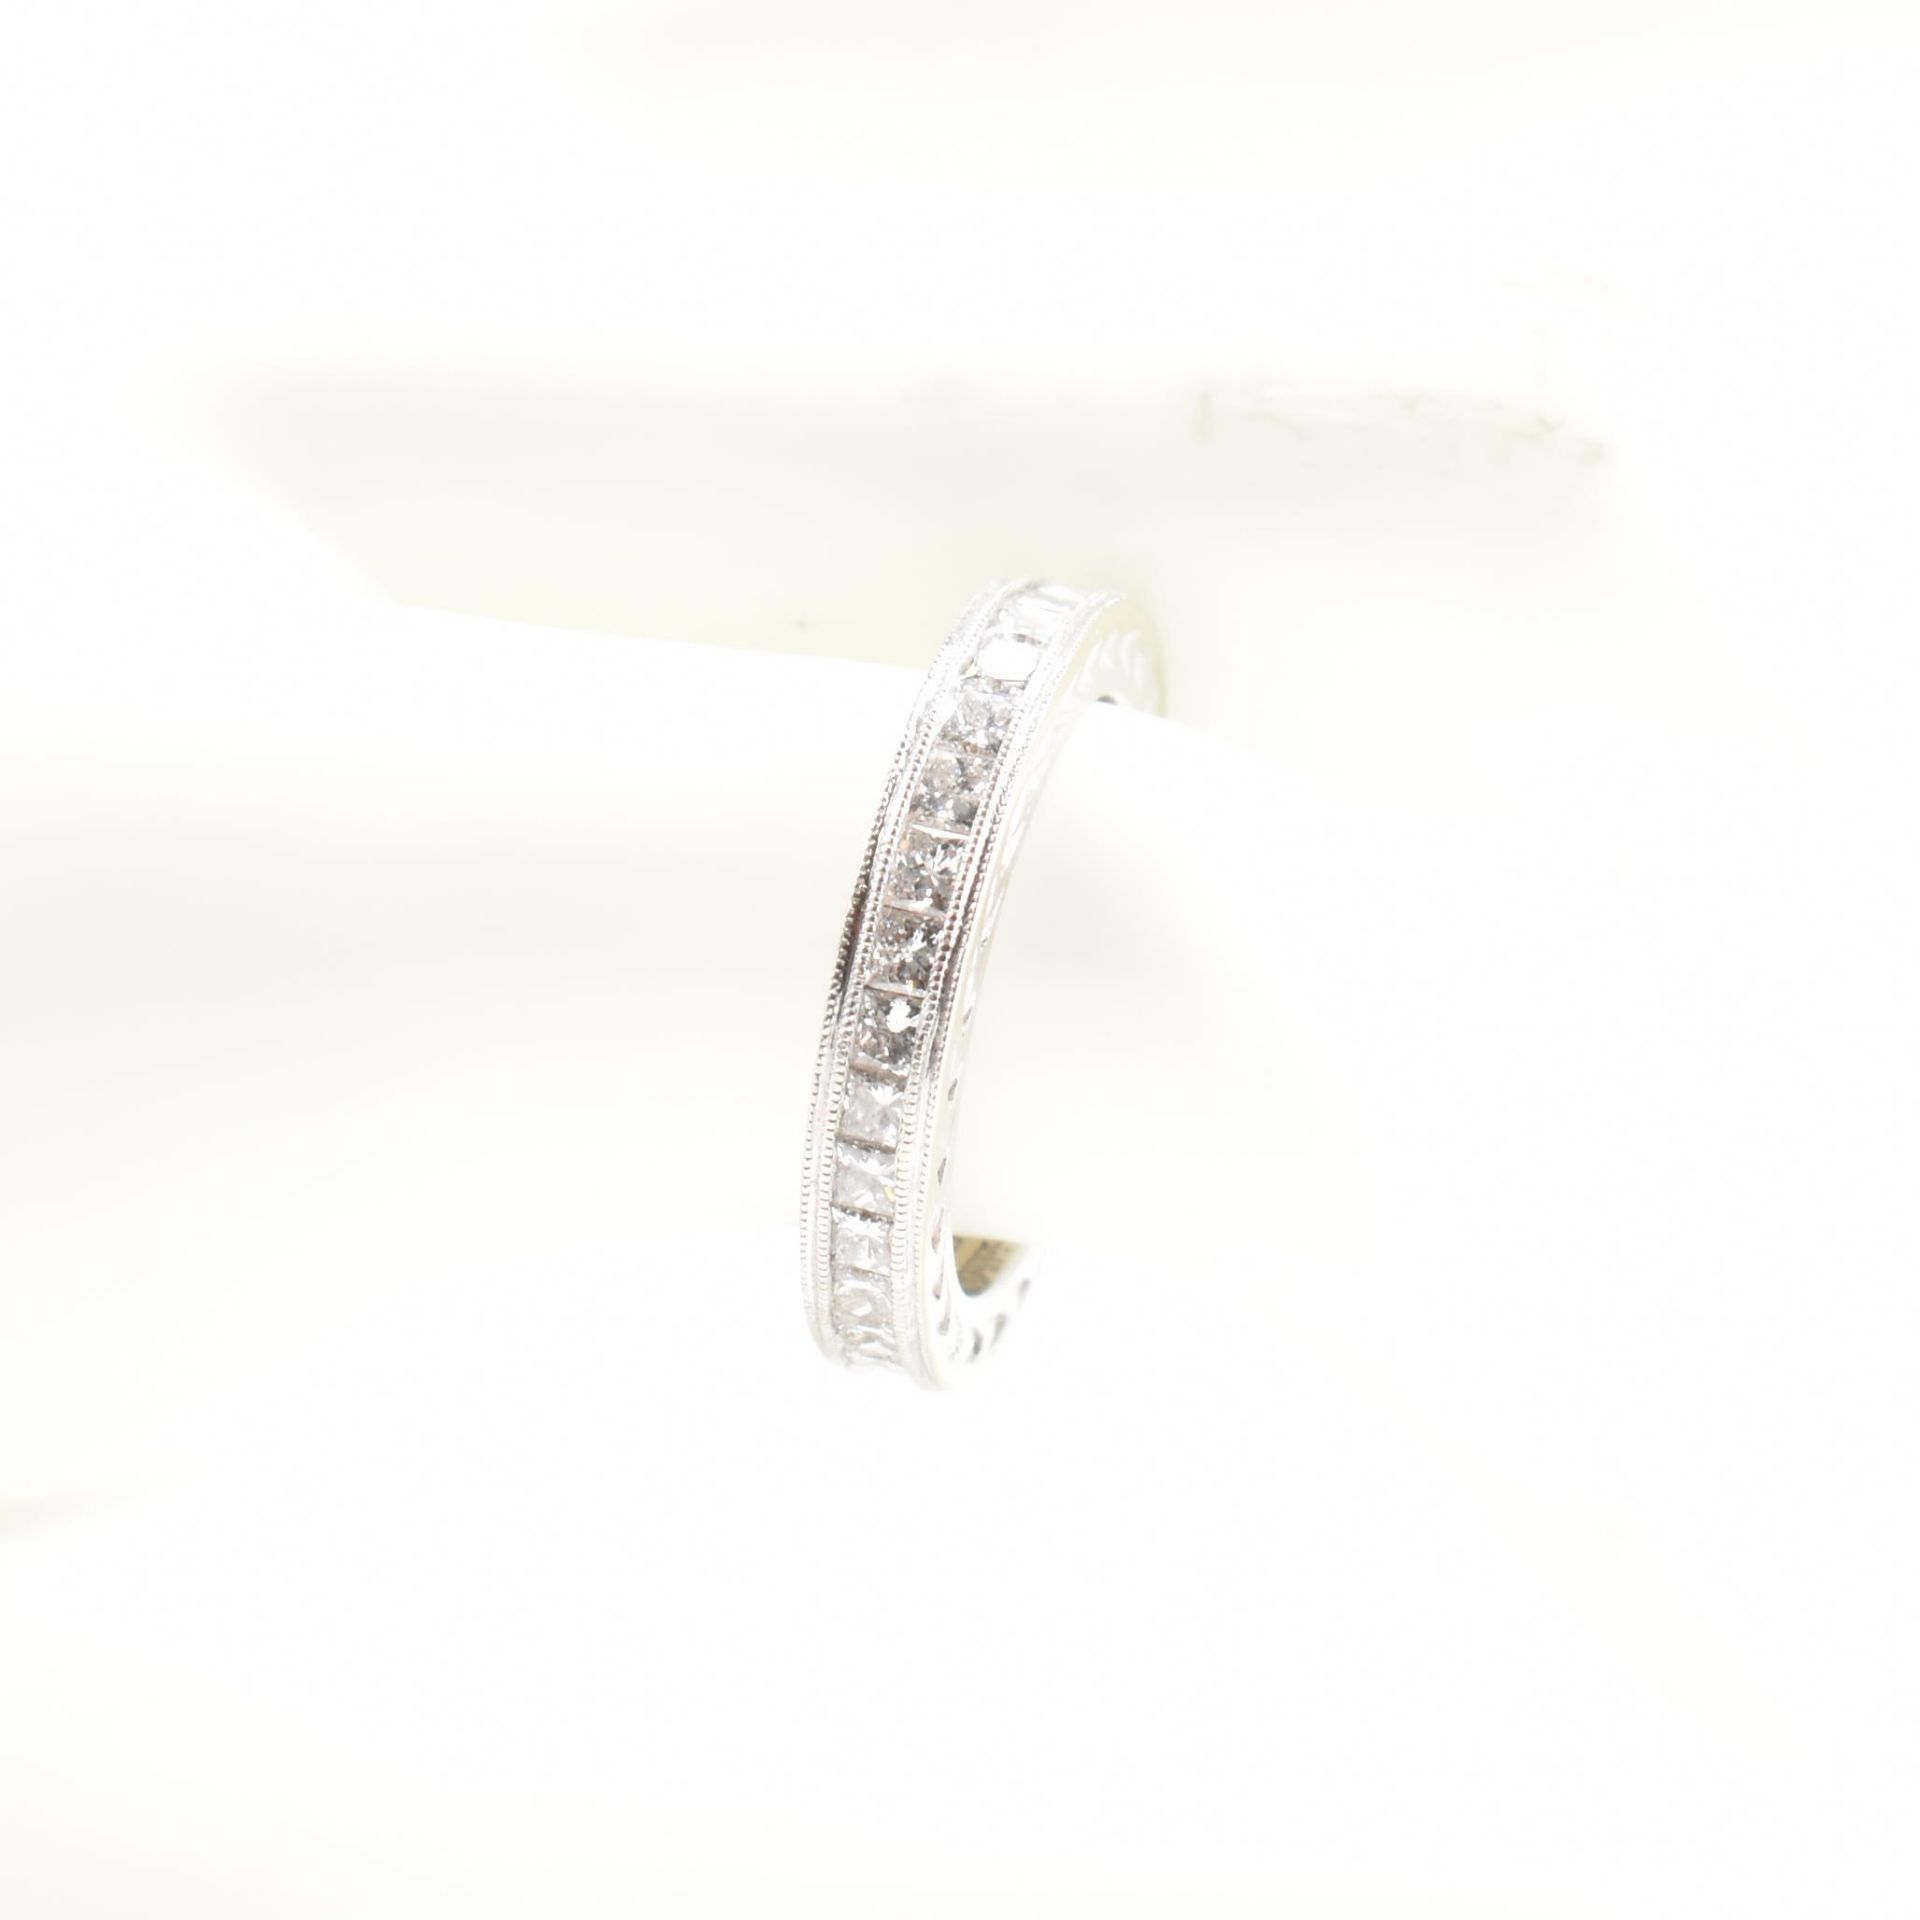 GABRIEL & CO 18CT WHITE GOLD & DIAMOND ETERNITY RING - Image 8 of 8